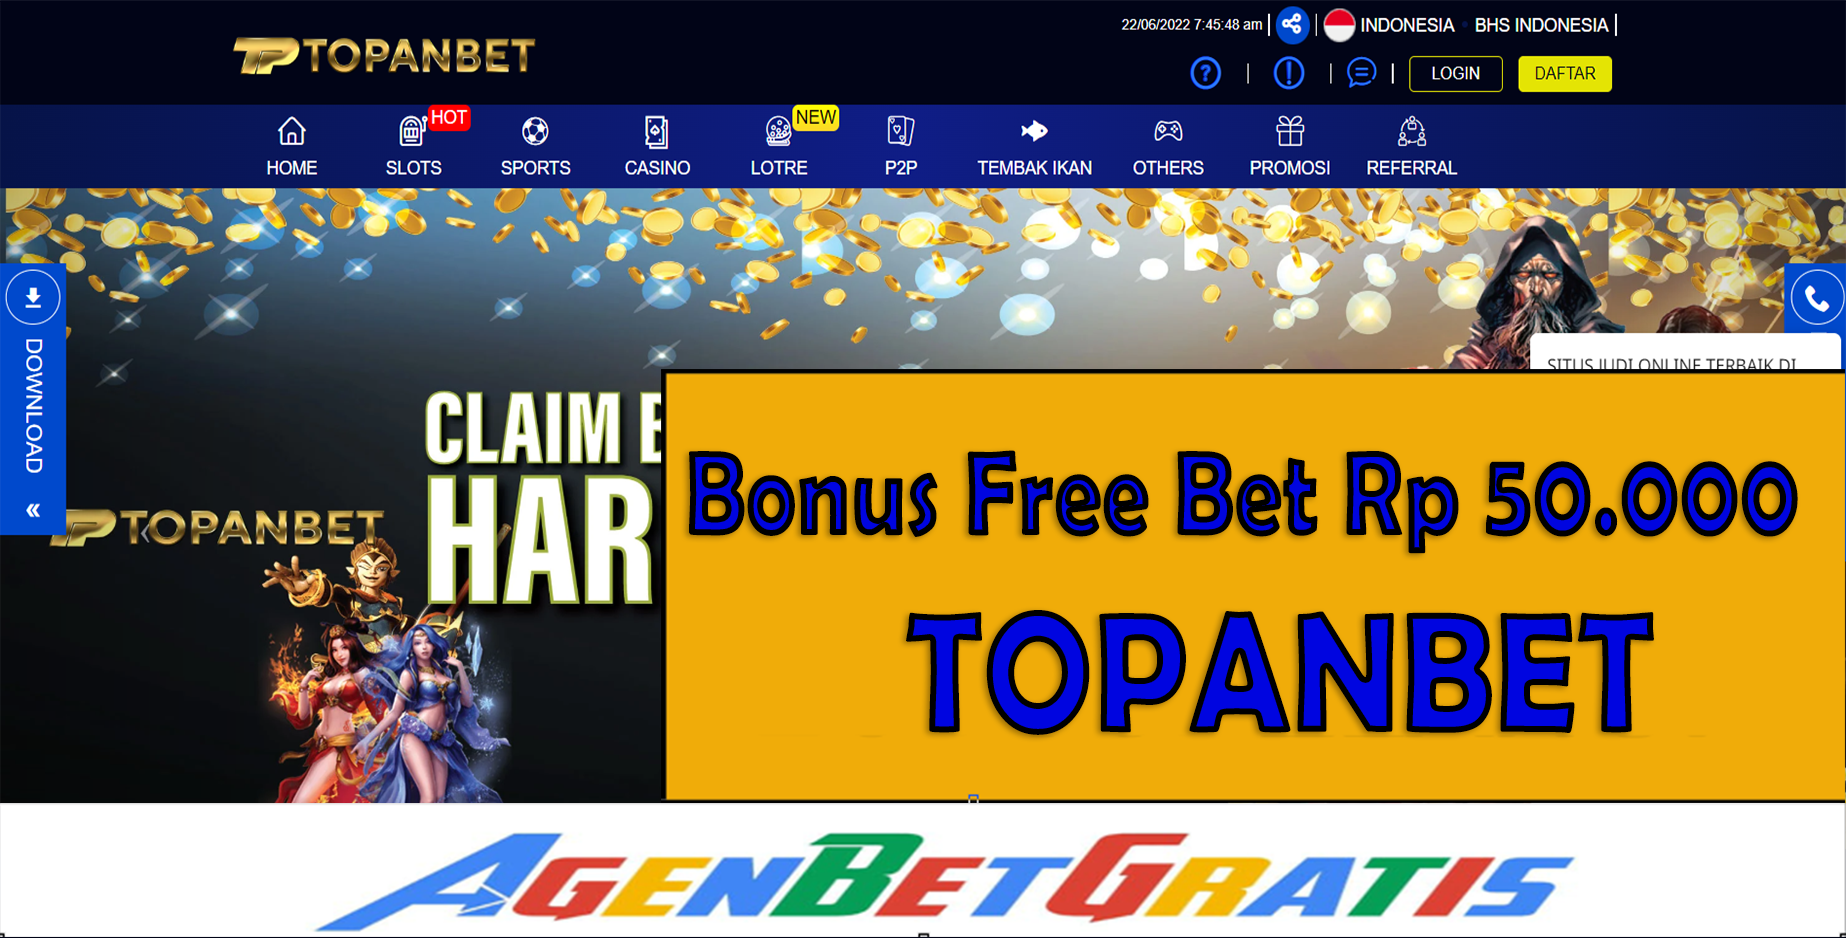 TOPANBET  - Bonus FreeBet 50.000